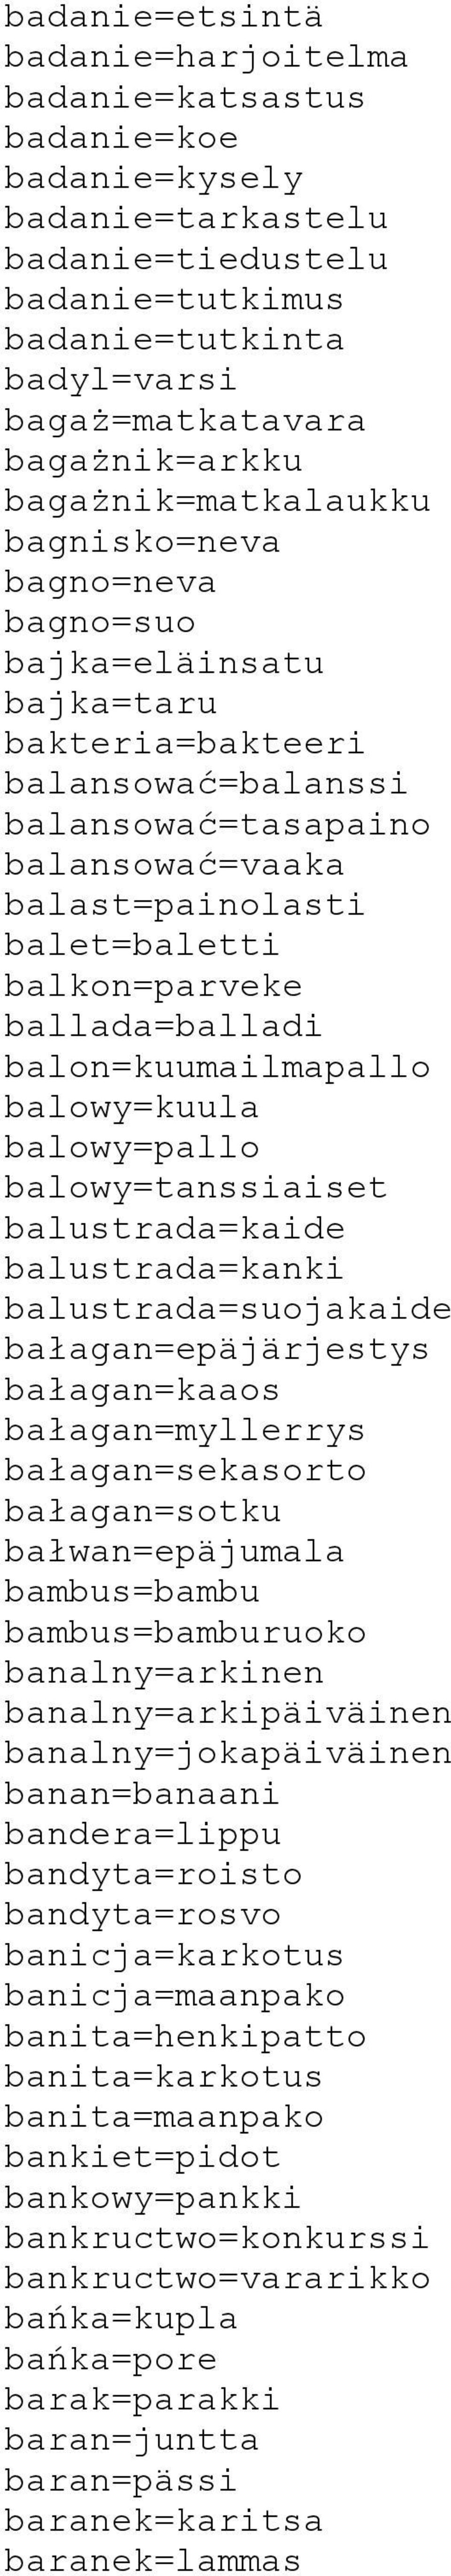 balkon=parveke ballada=balladi balon=kuumailmapallo balowy=kuula balowy=pallo balowy=tanssiaiset balustrada=kaide balustrada=kanki balustrada=suojakaide bałagan=epäjärjestys bałagan=kaaos